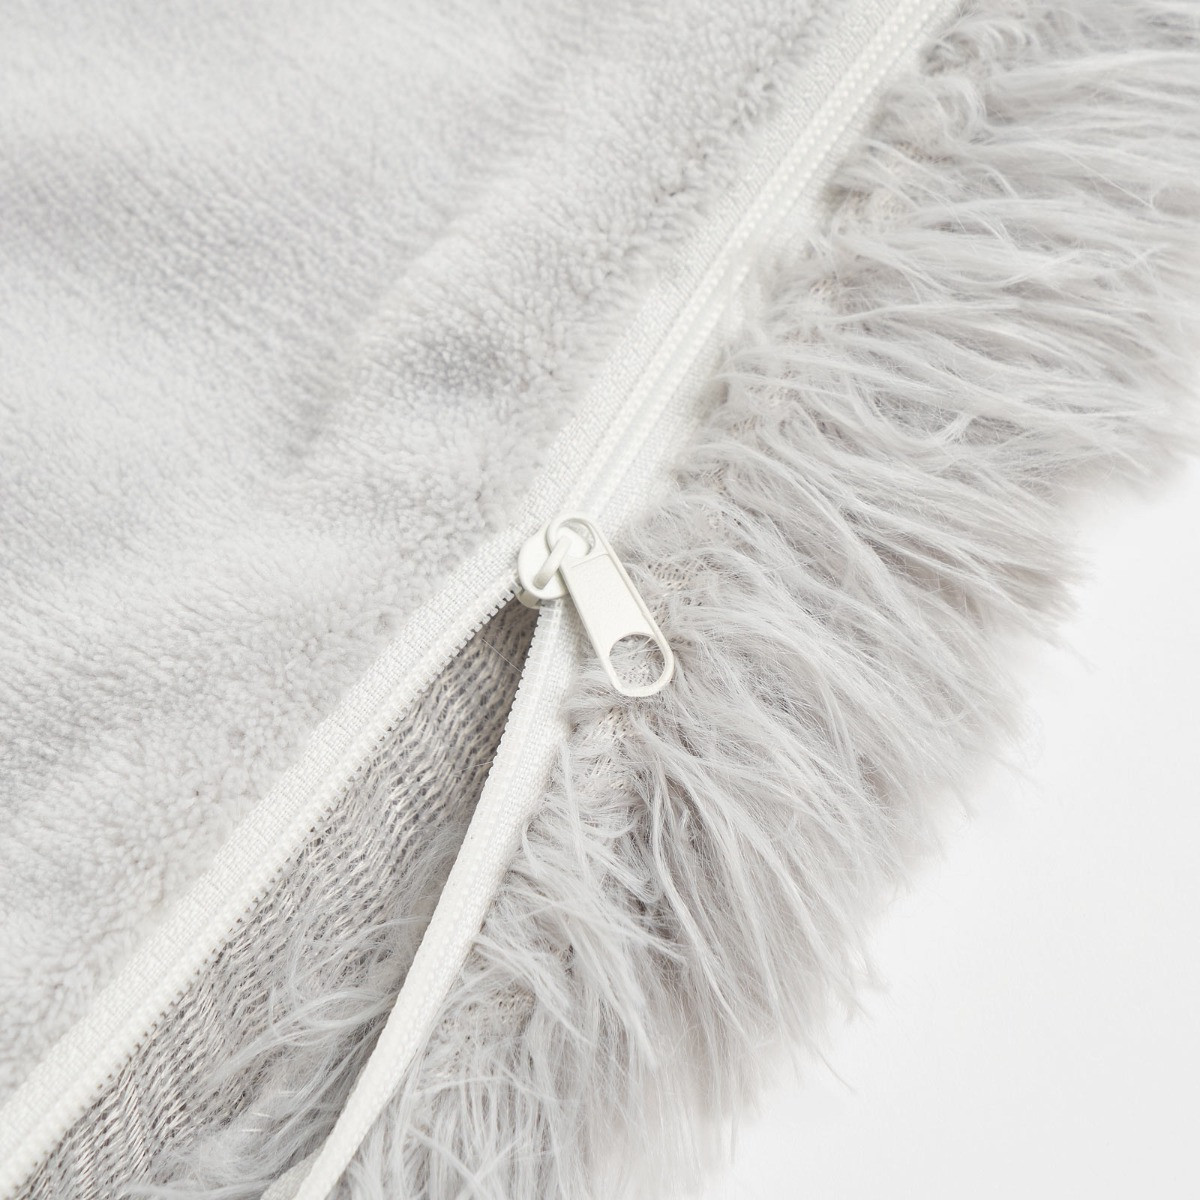 Sienna 4 Pack Fluffy Cushion Covers, Silver - 55 x 55cm>